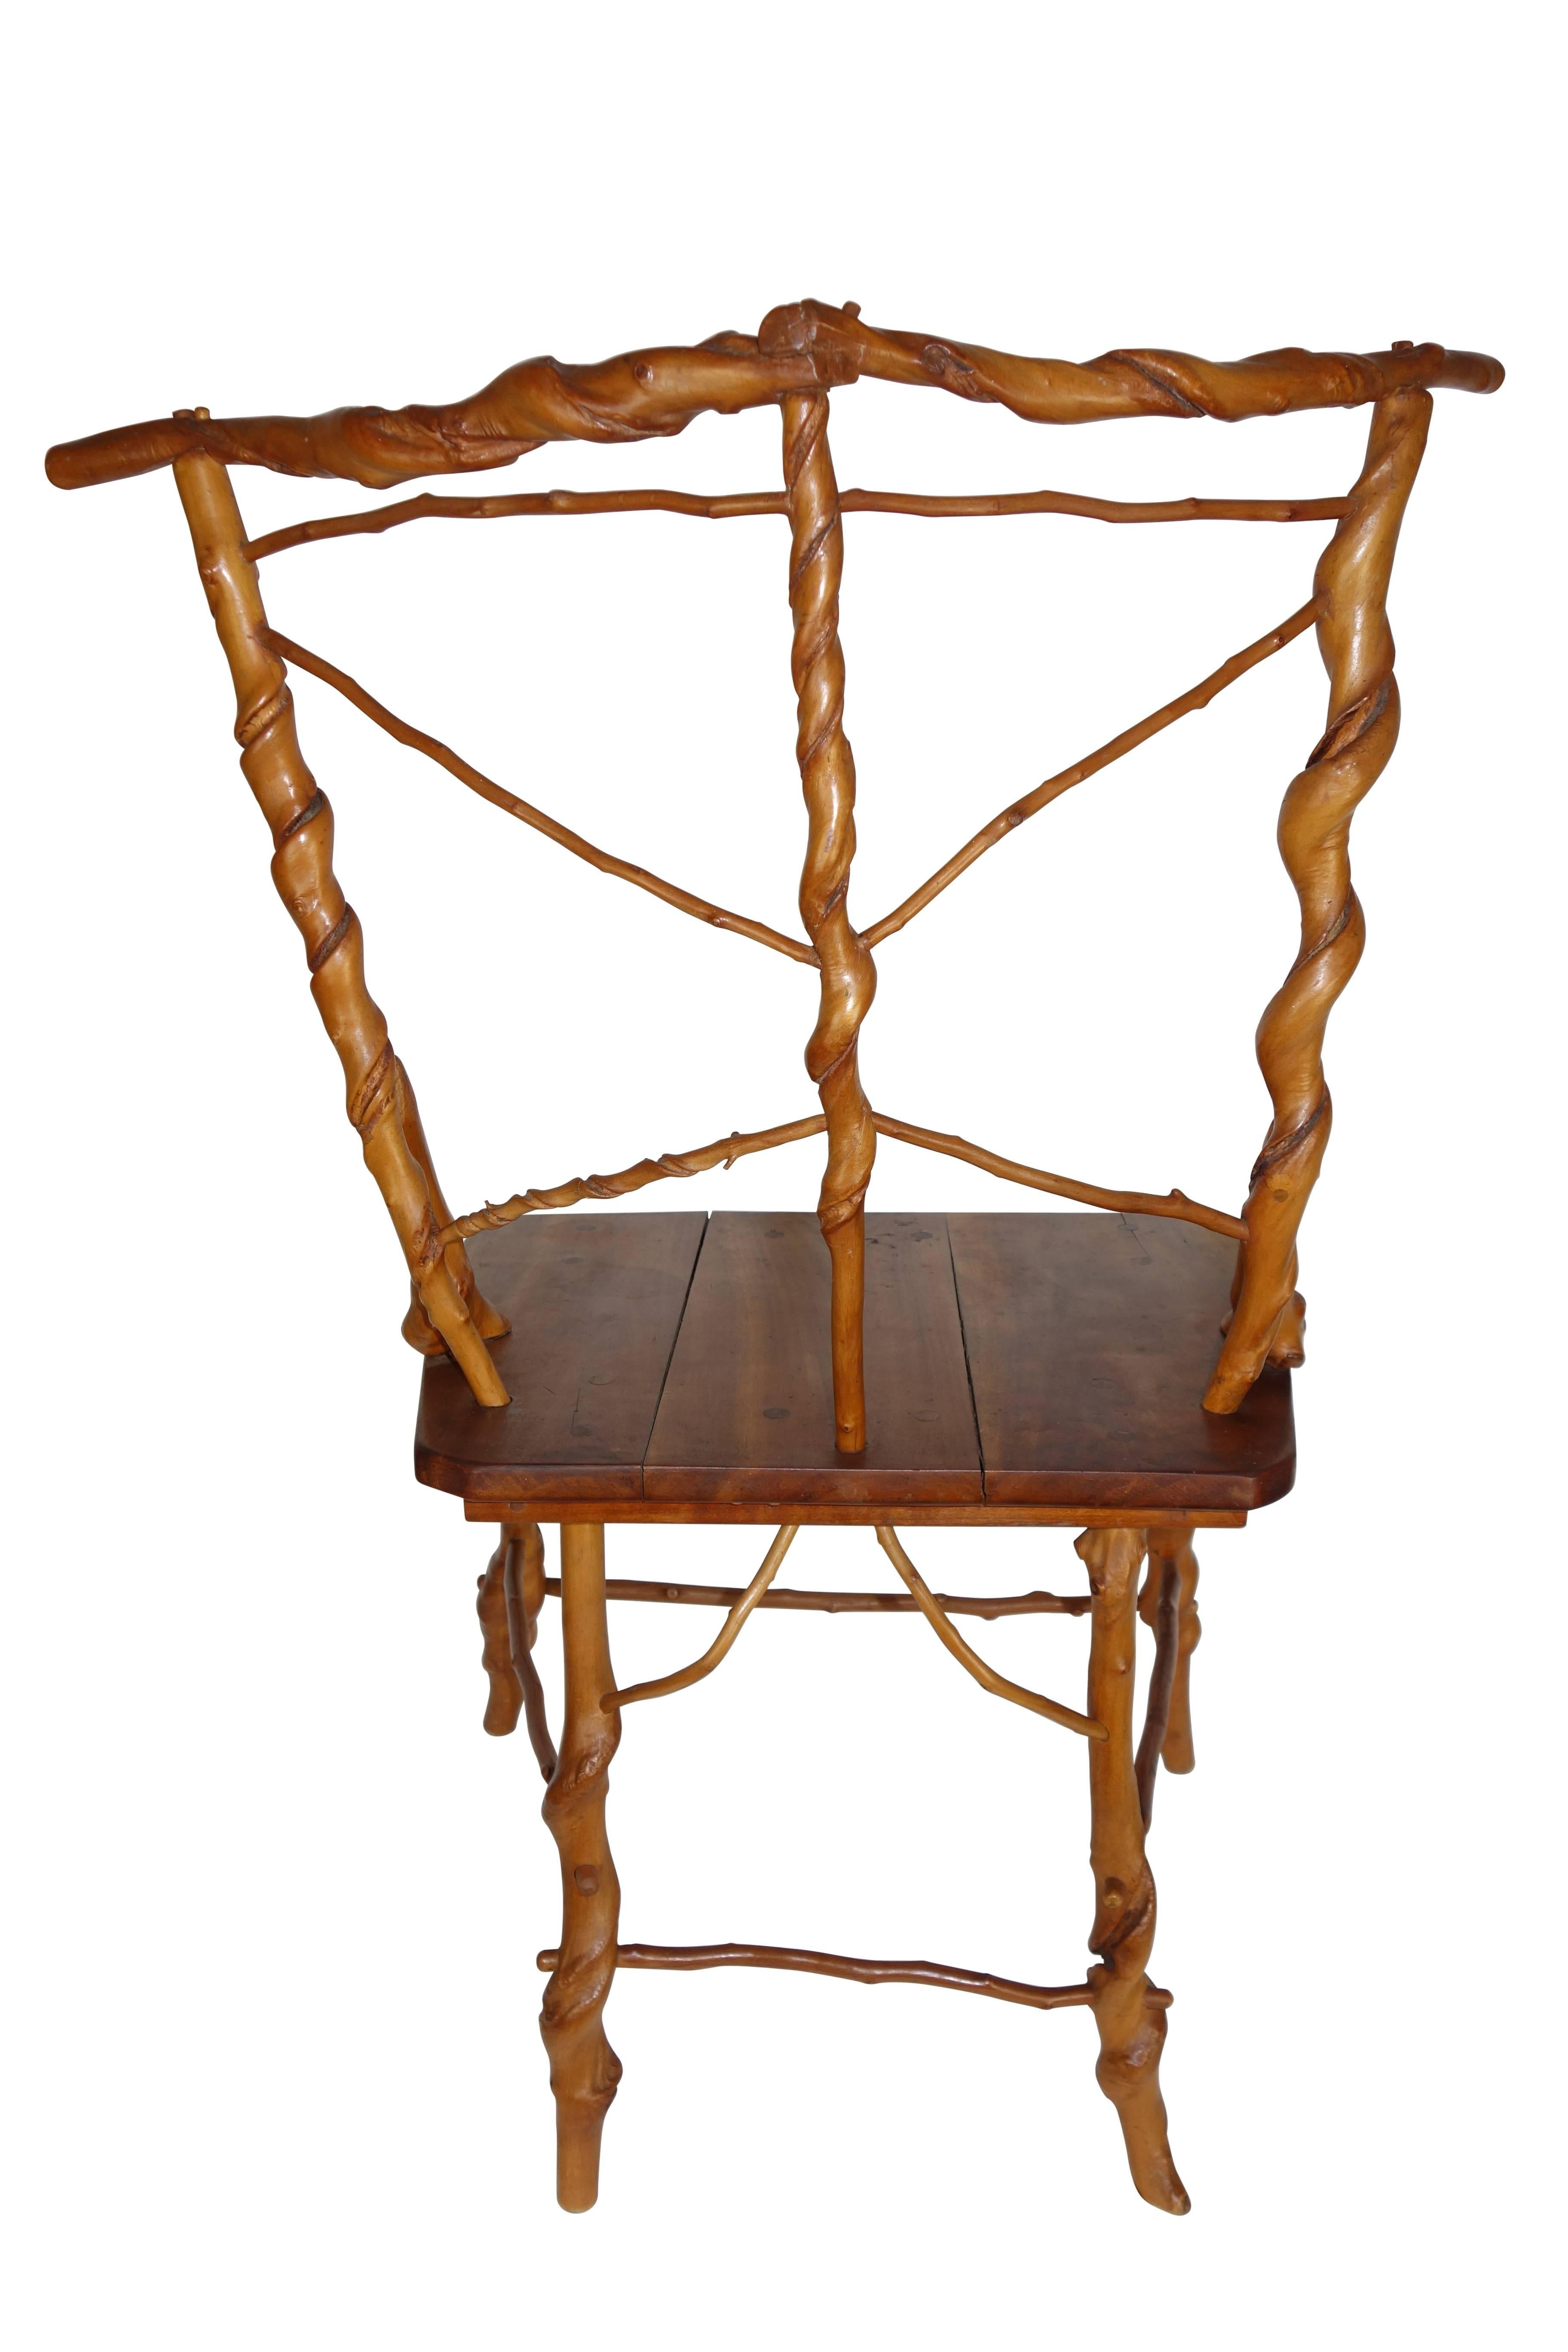 American Studio Craft Chair from Salamanaca, New York